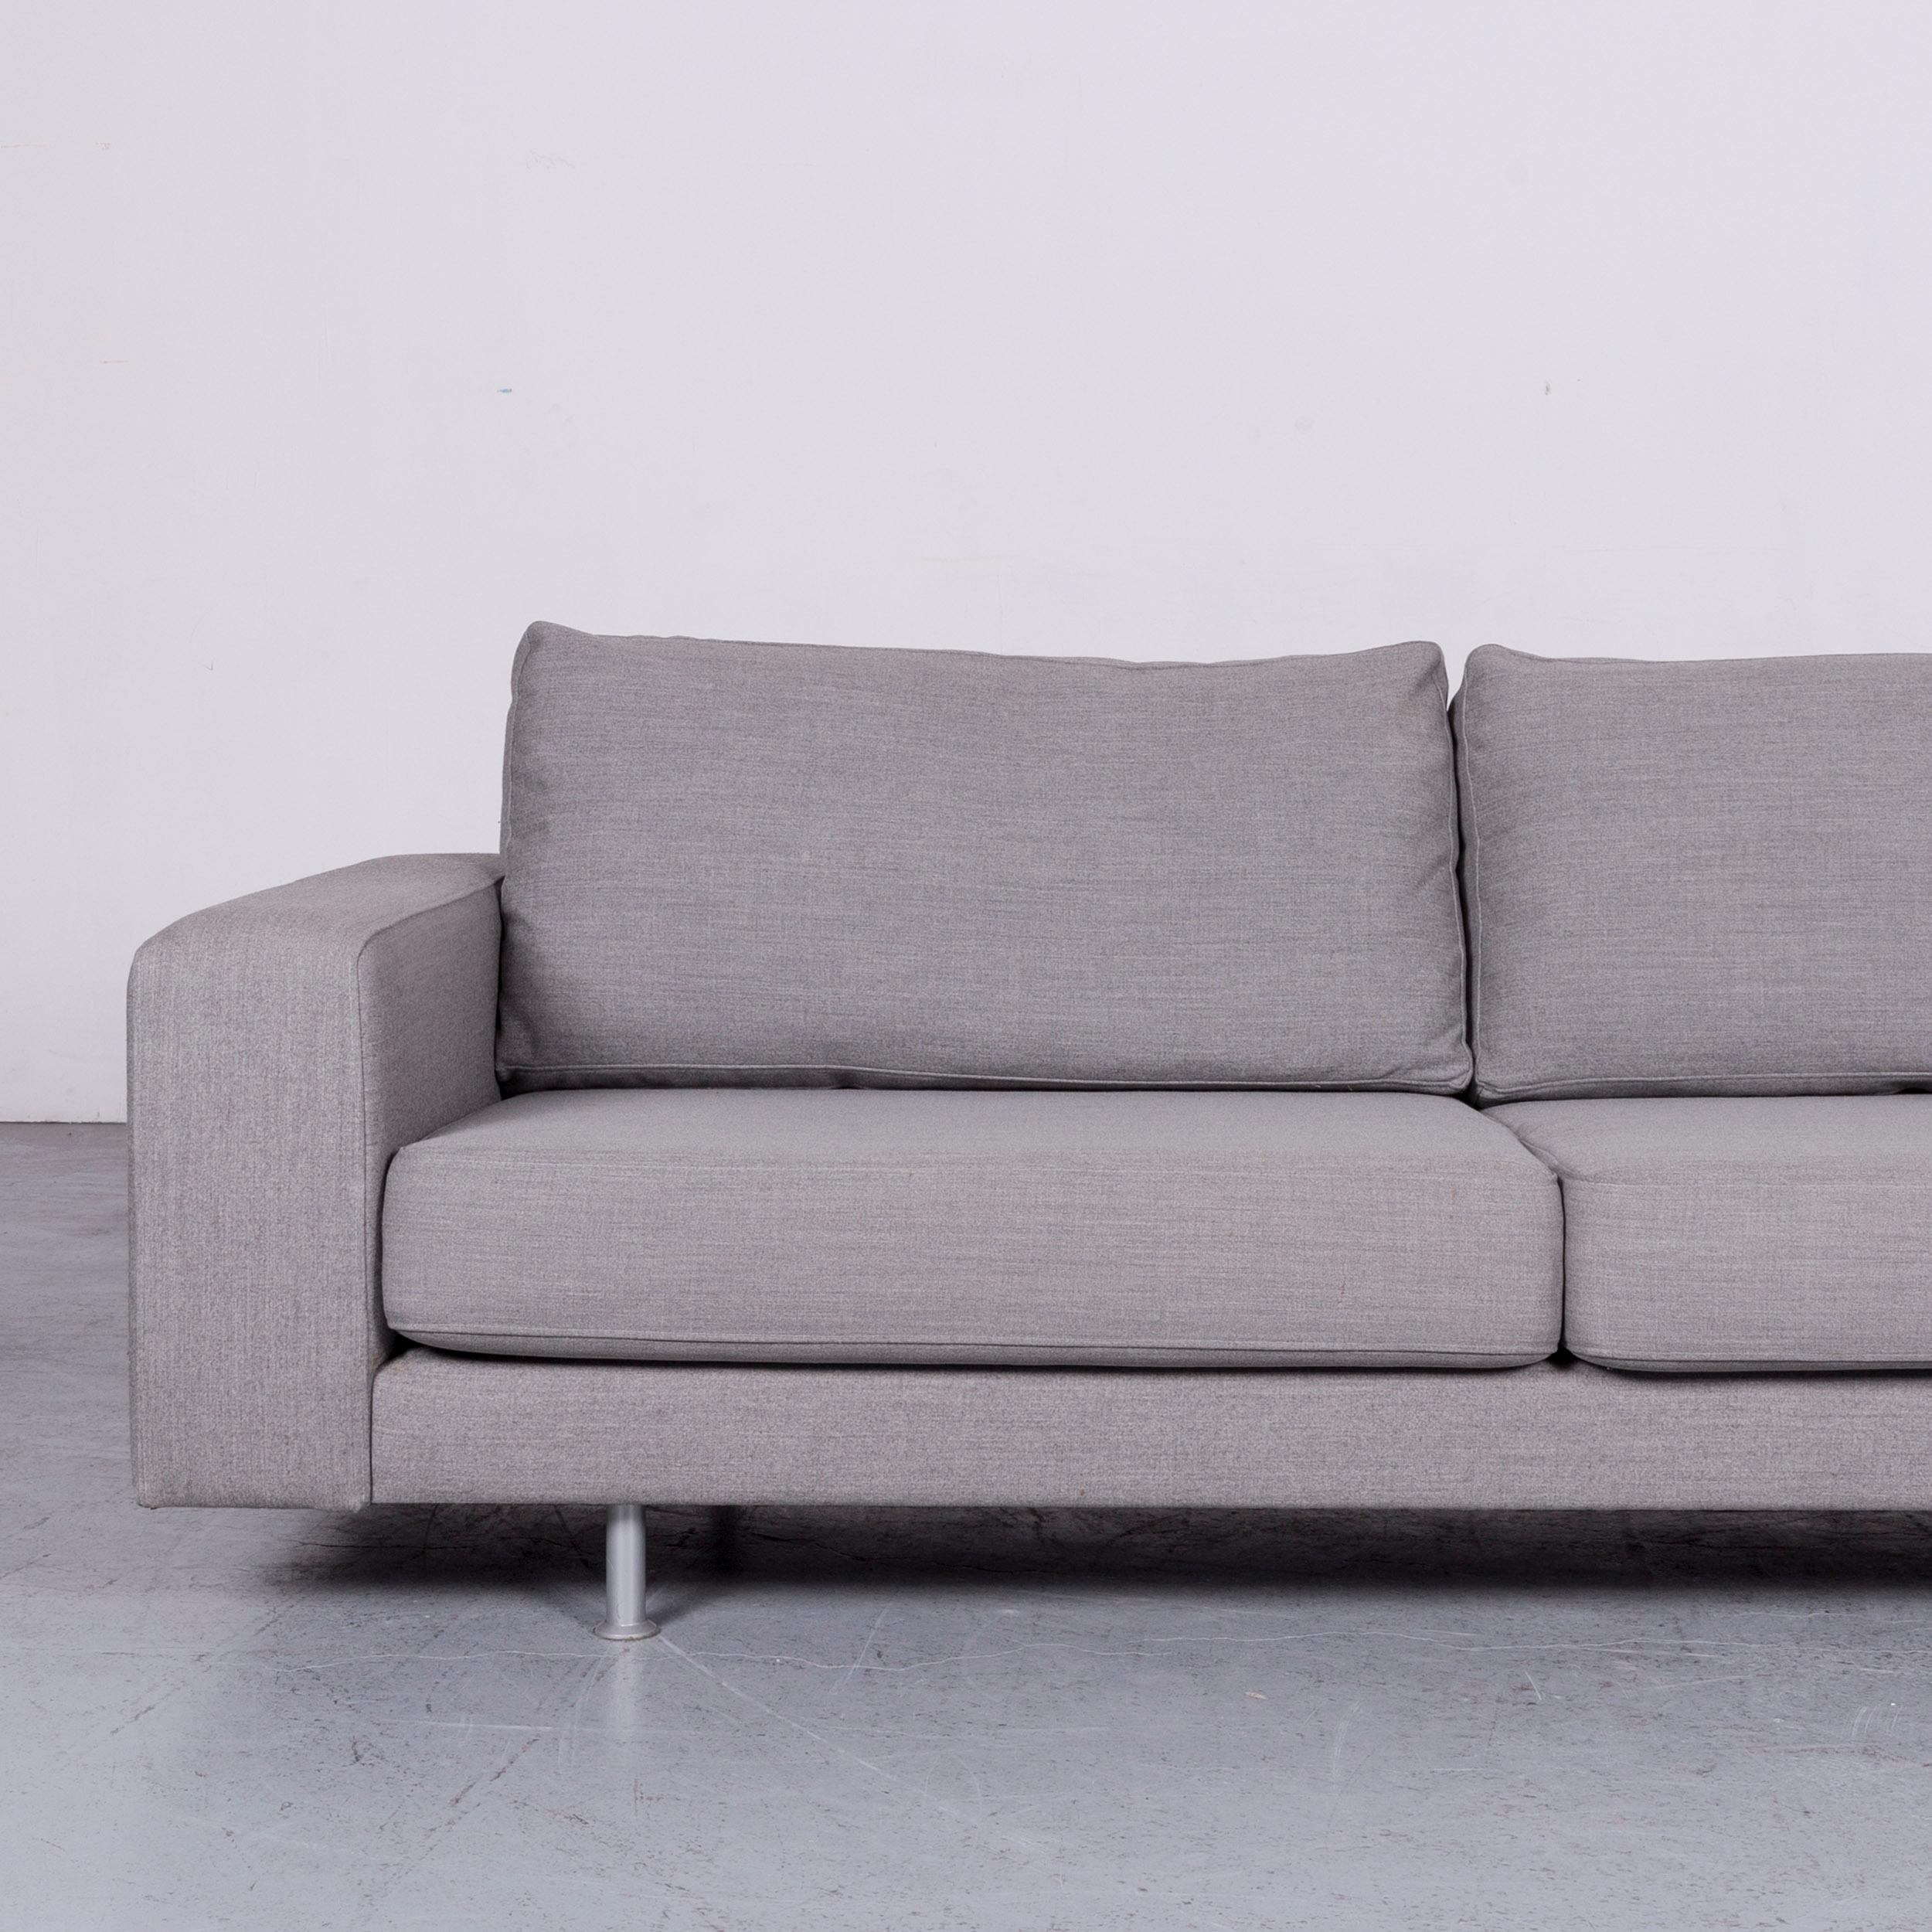 Pro Seda Designer Fabric Sofa Grey Sofa Couch Modern In Good Condition For Sale In Cologne, DE